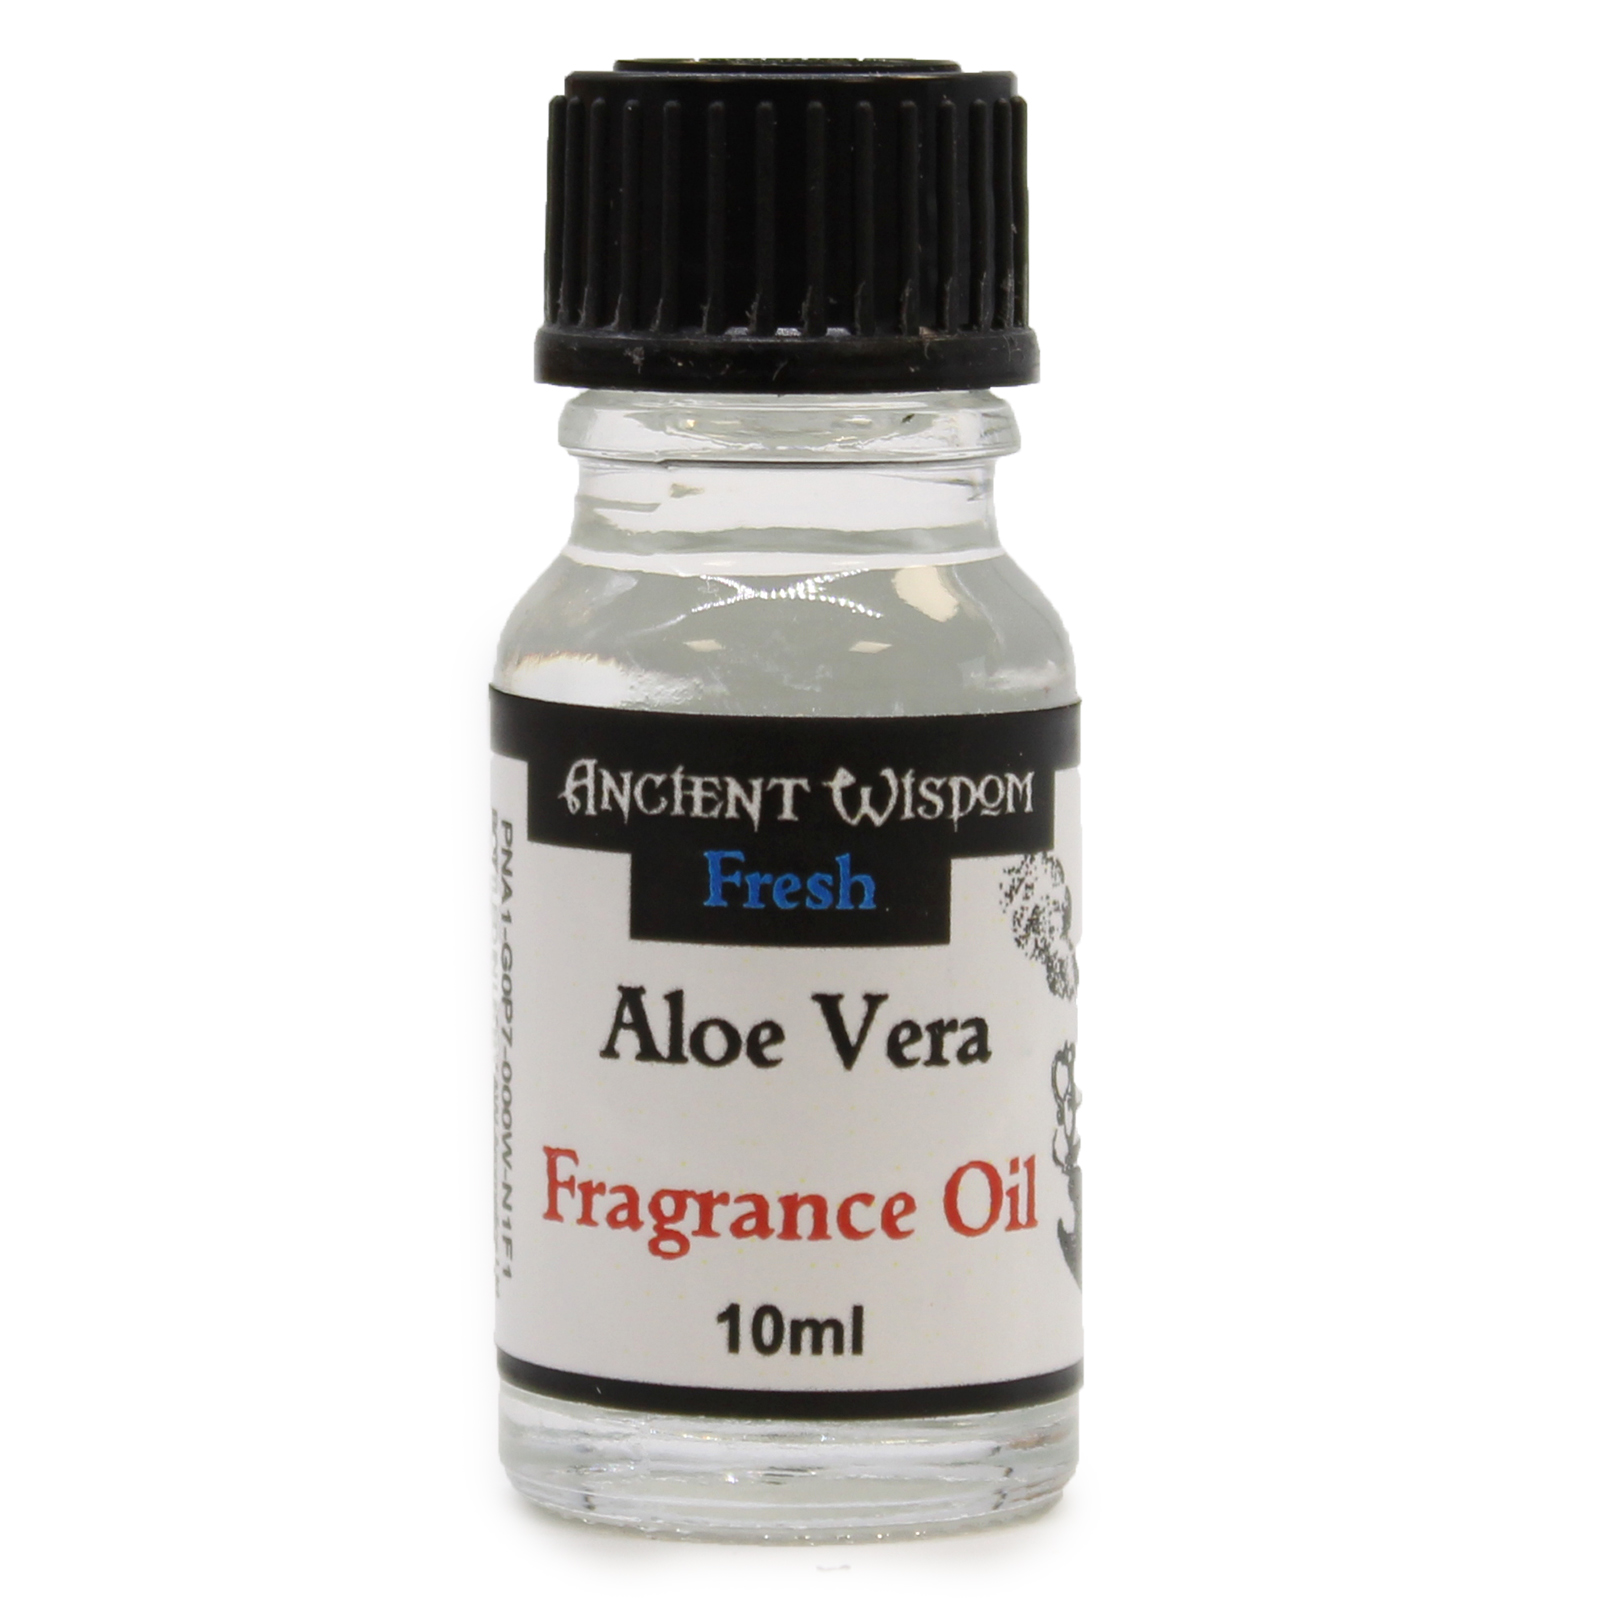 2 x 10ml Aloe Vera Fragrance Oils